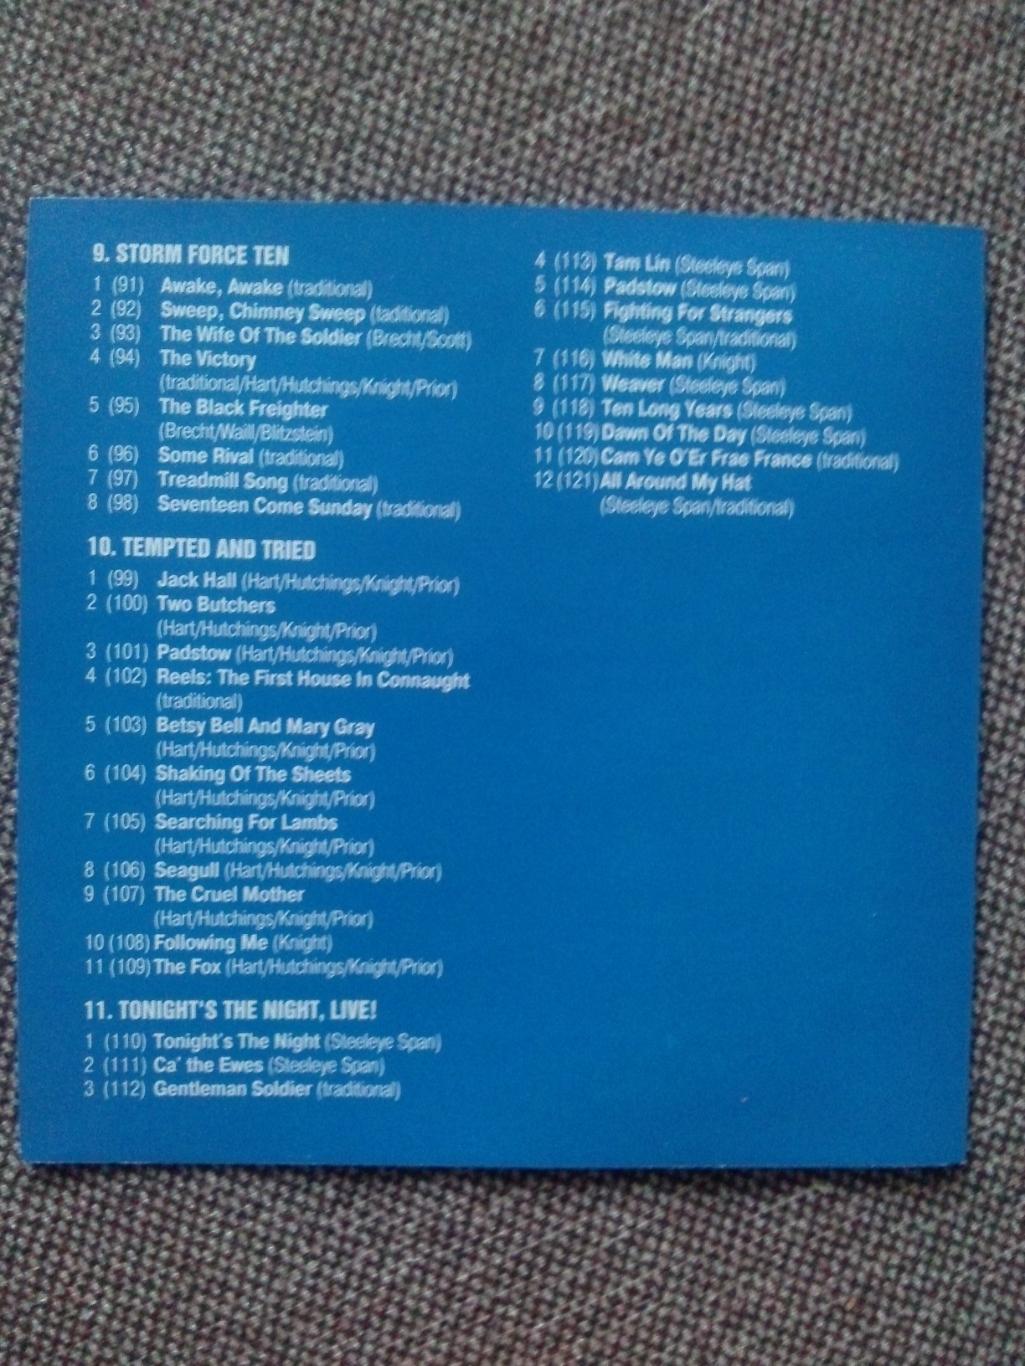 MP - 3 CD диск : Maddy Prior & Steeleye Span 1971 - 1994 гг. 11 альбомов Рок 1